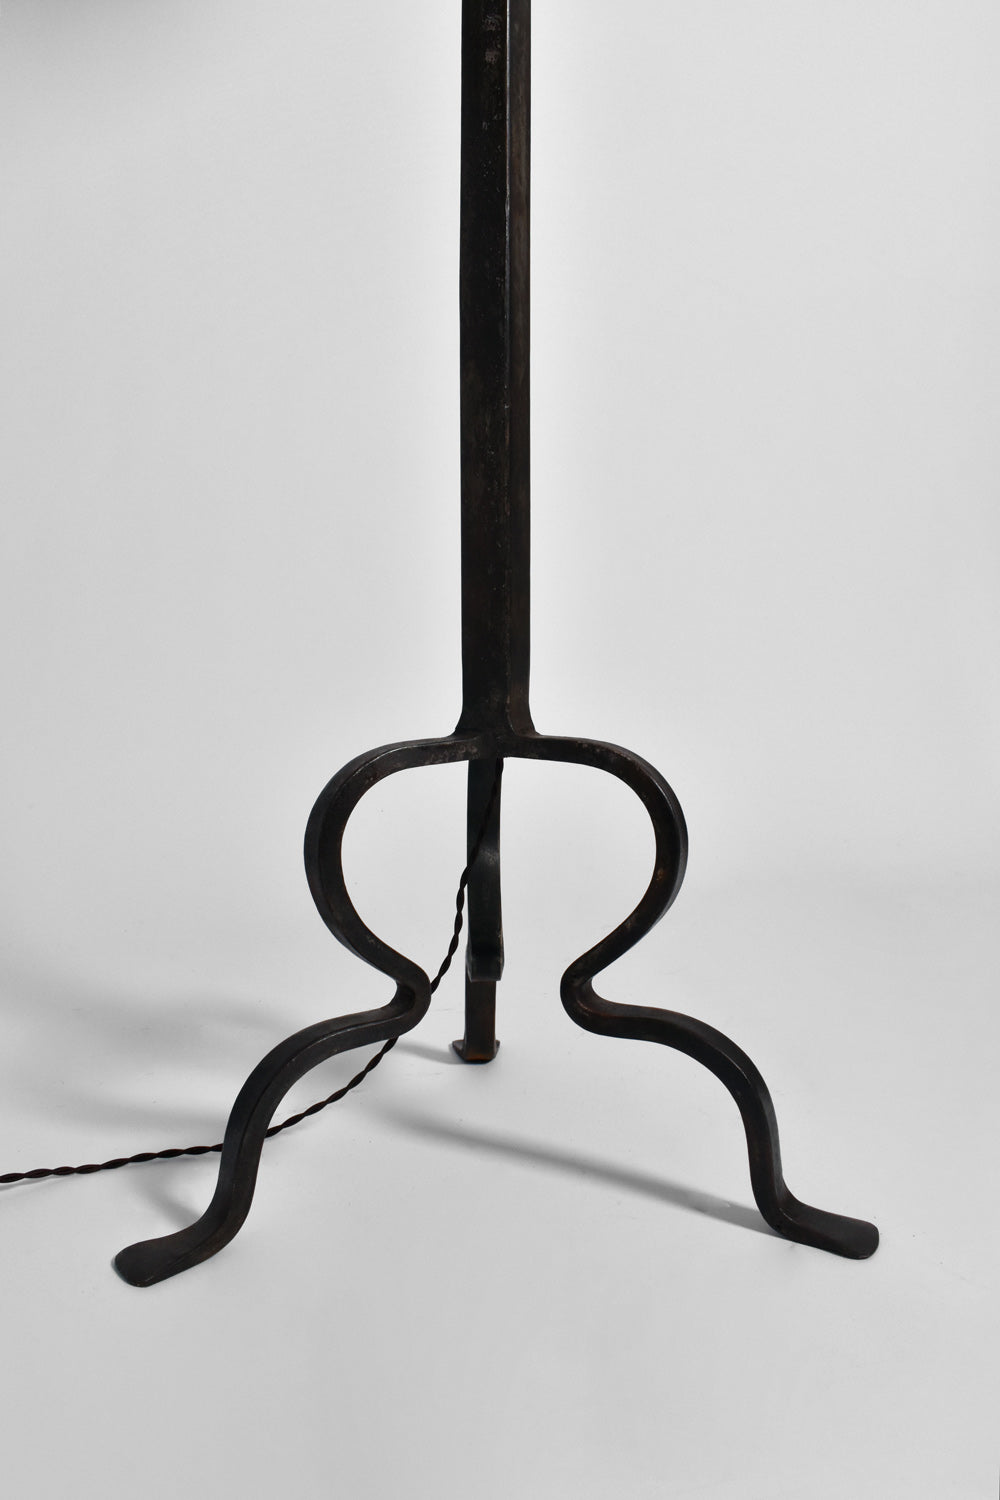 Tripod wrought iron floor lamp, 1960s.